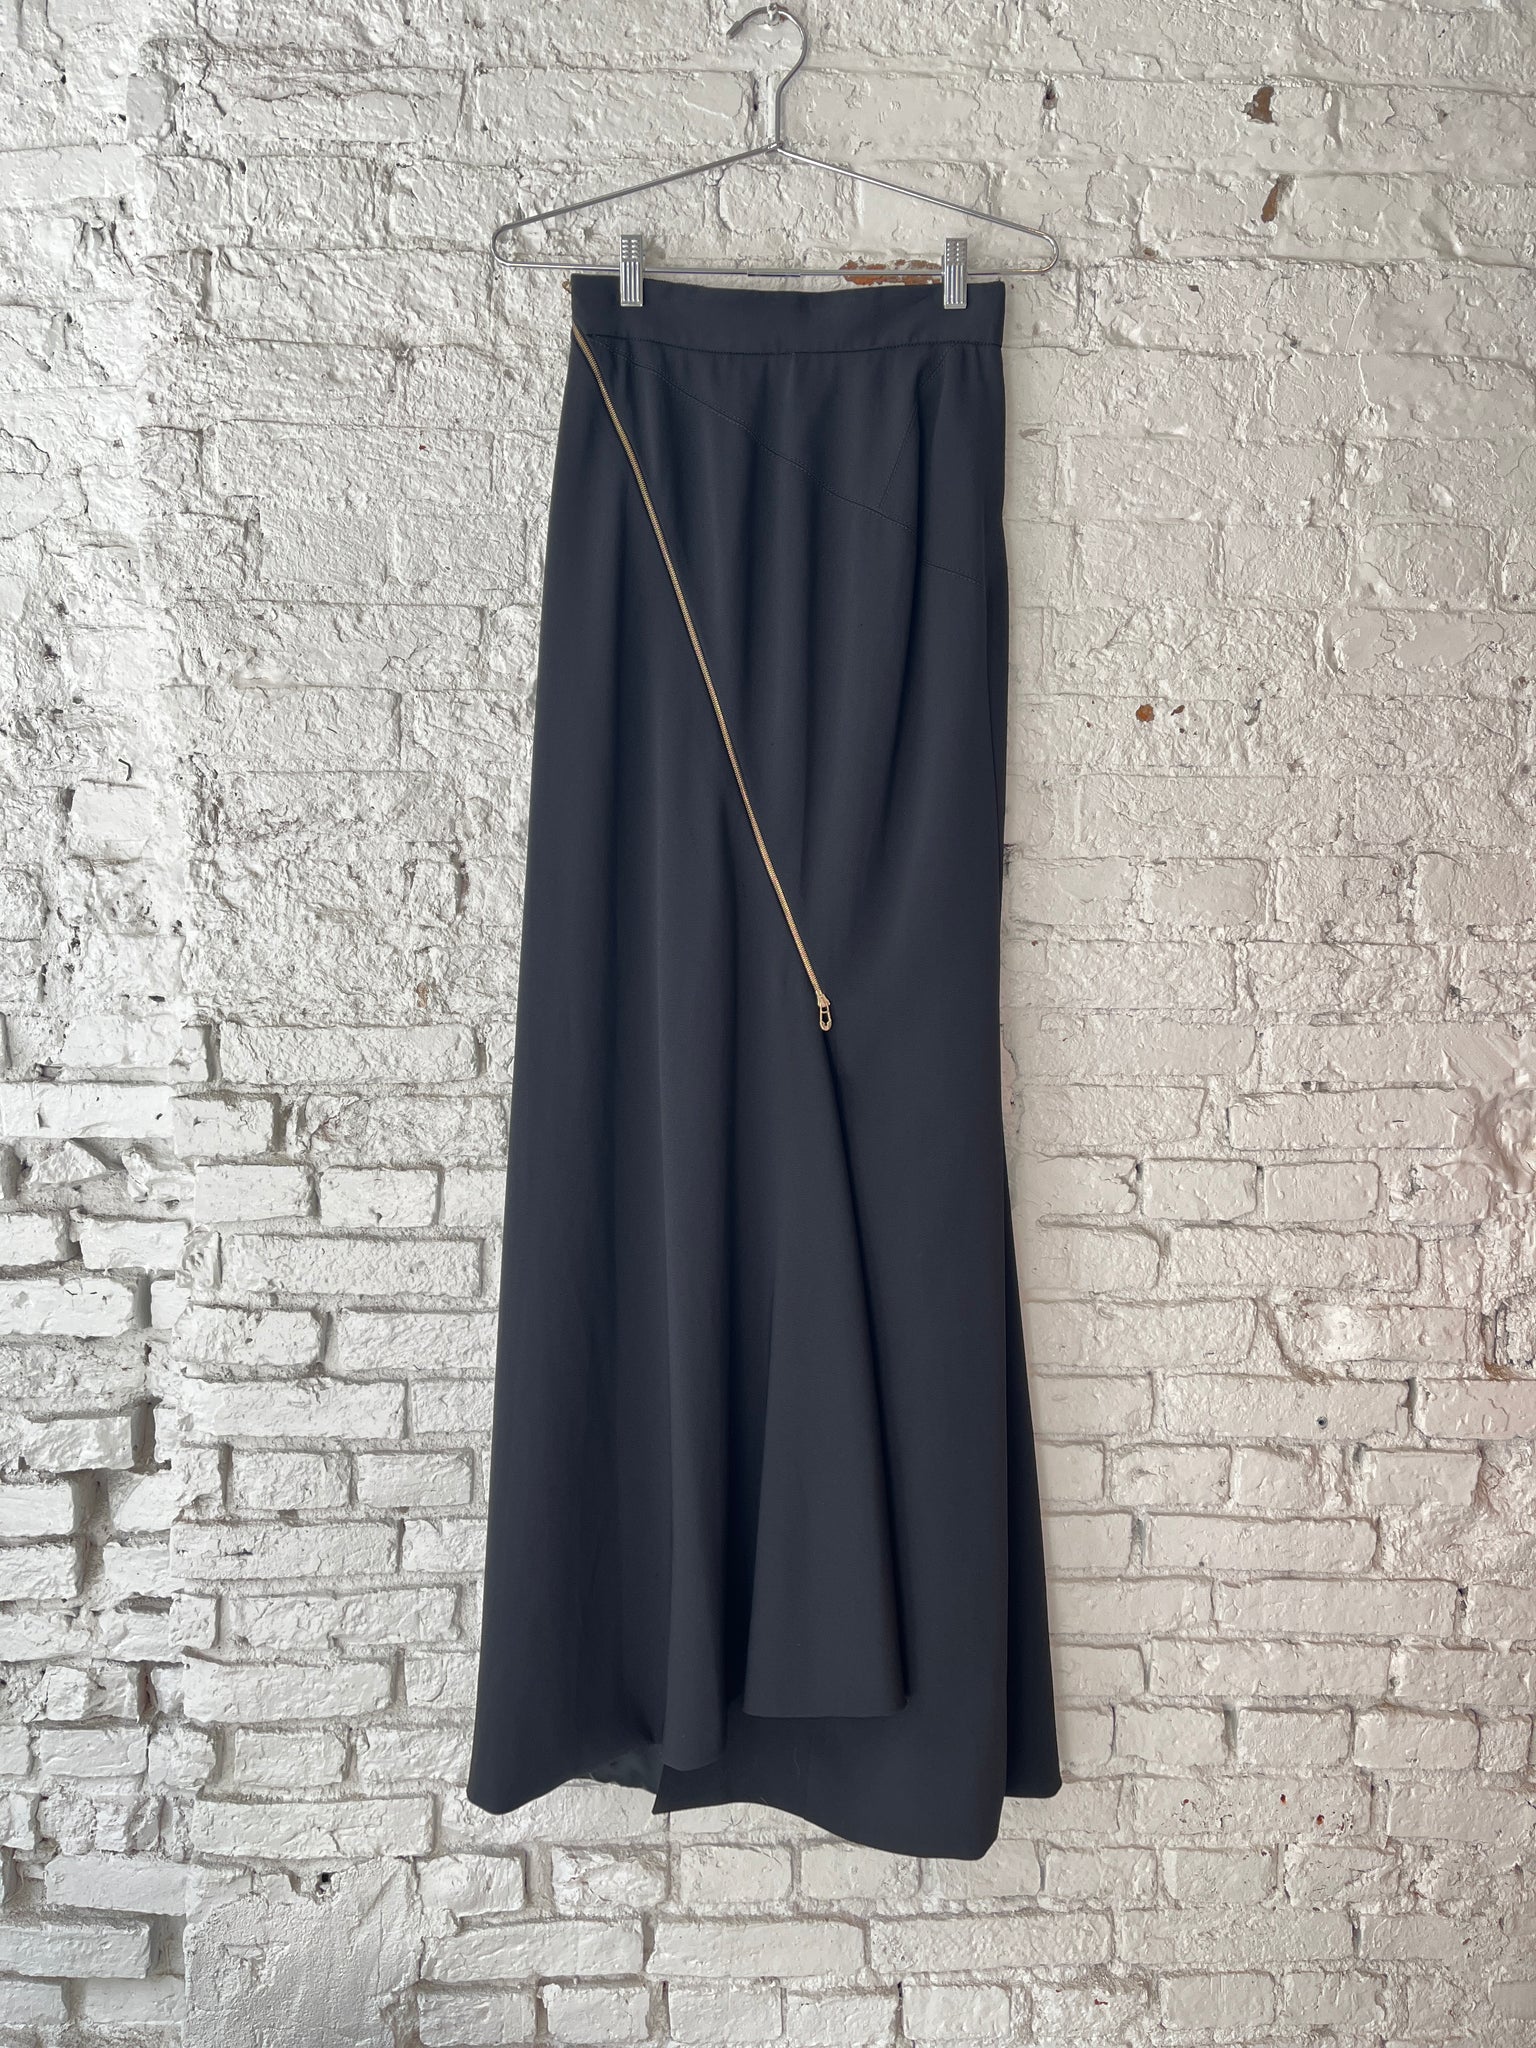 Gianfranco Ferré, Asymmetrical Zip Skirt, 1990s